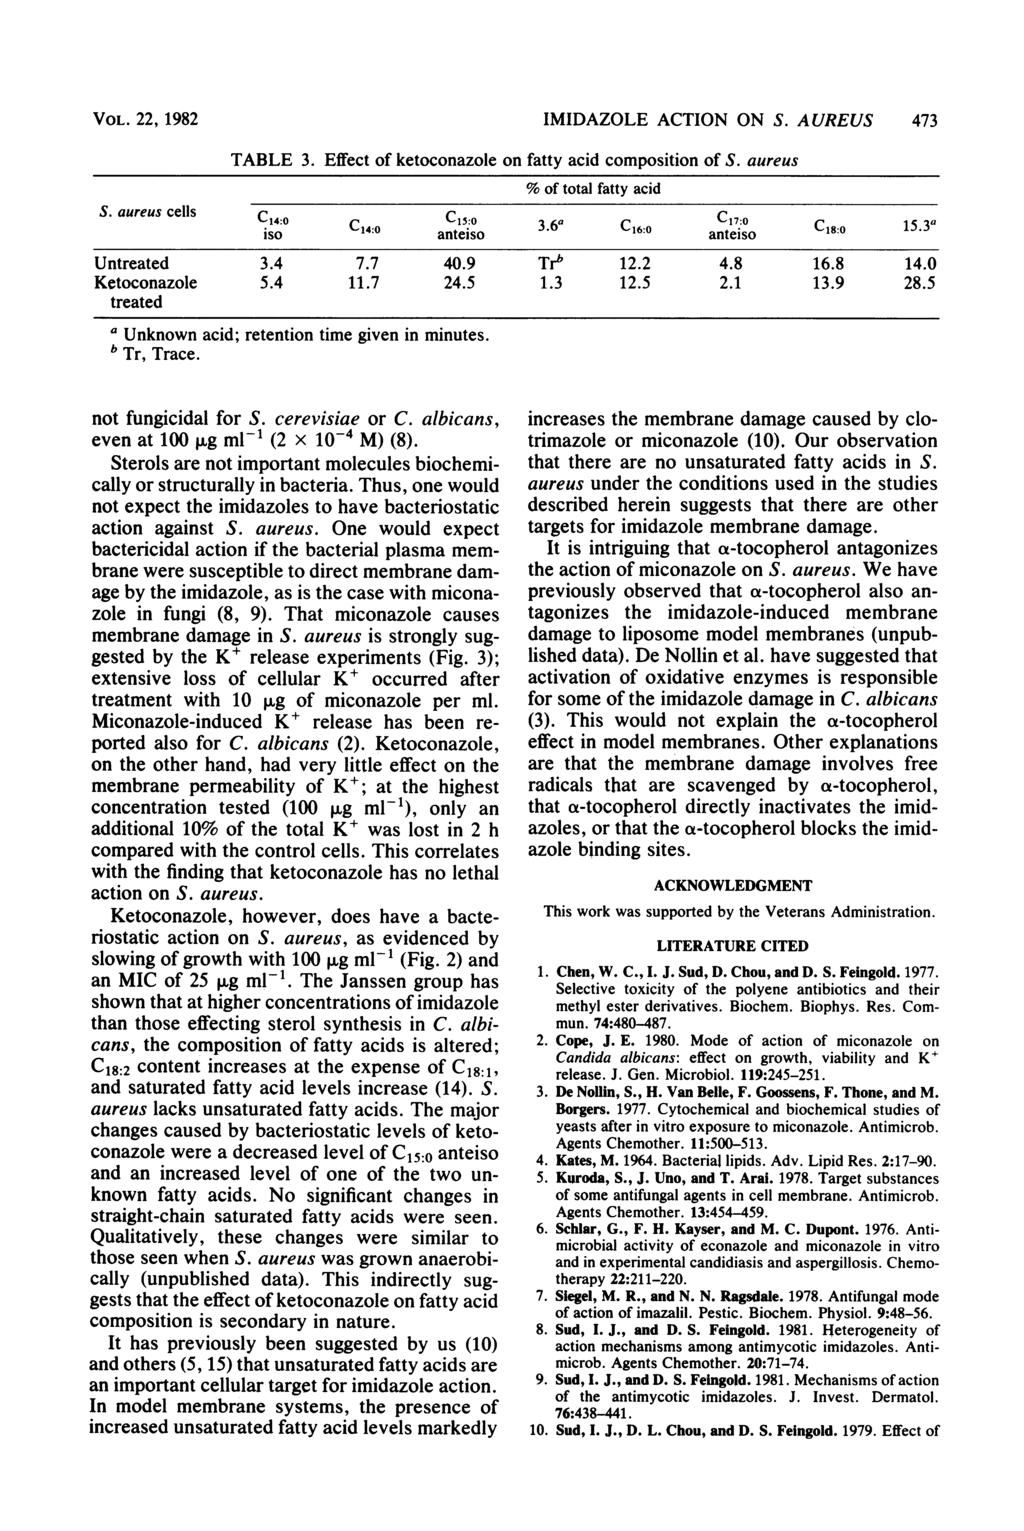 VOL. 22, 1982 TABLE 3. IMIDAZOLE ACTION ON S. AUREUS 473 Effect of ketoconazole on fatty acid composition of S. aureus % of total fatty acid S.